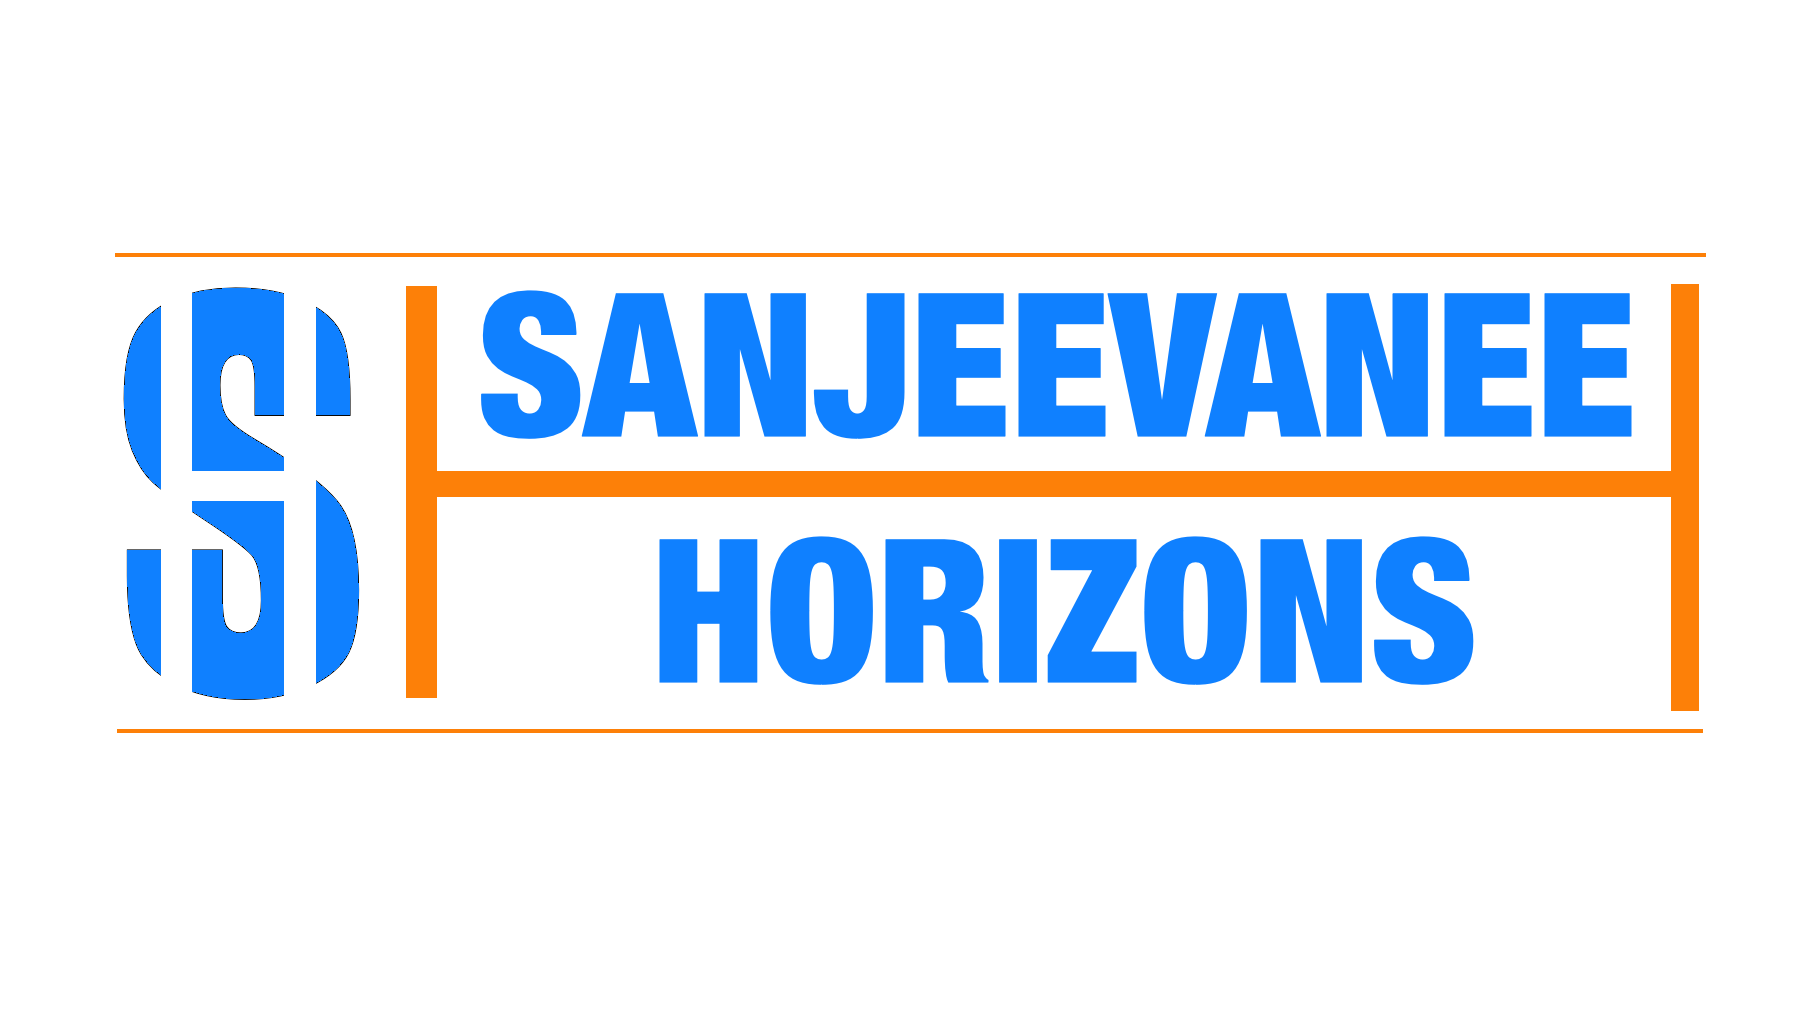 sanjeevanee.com